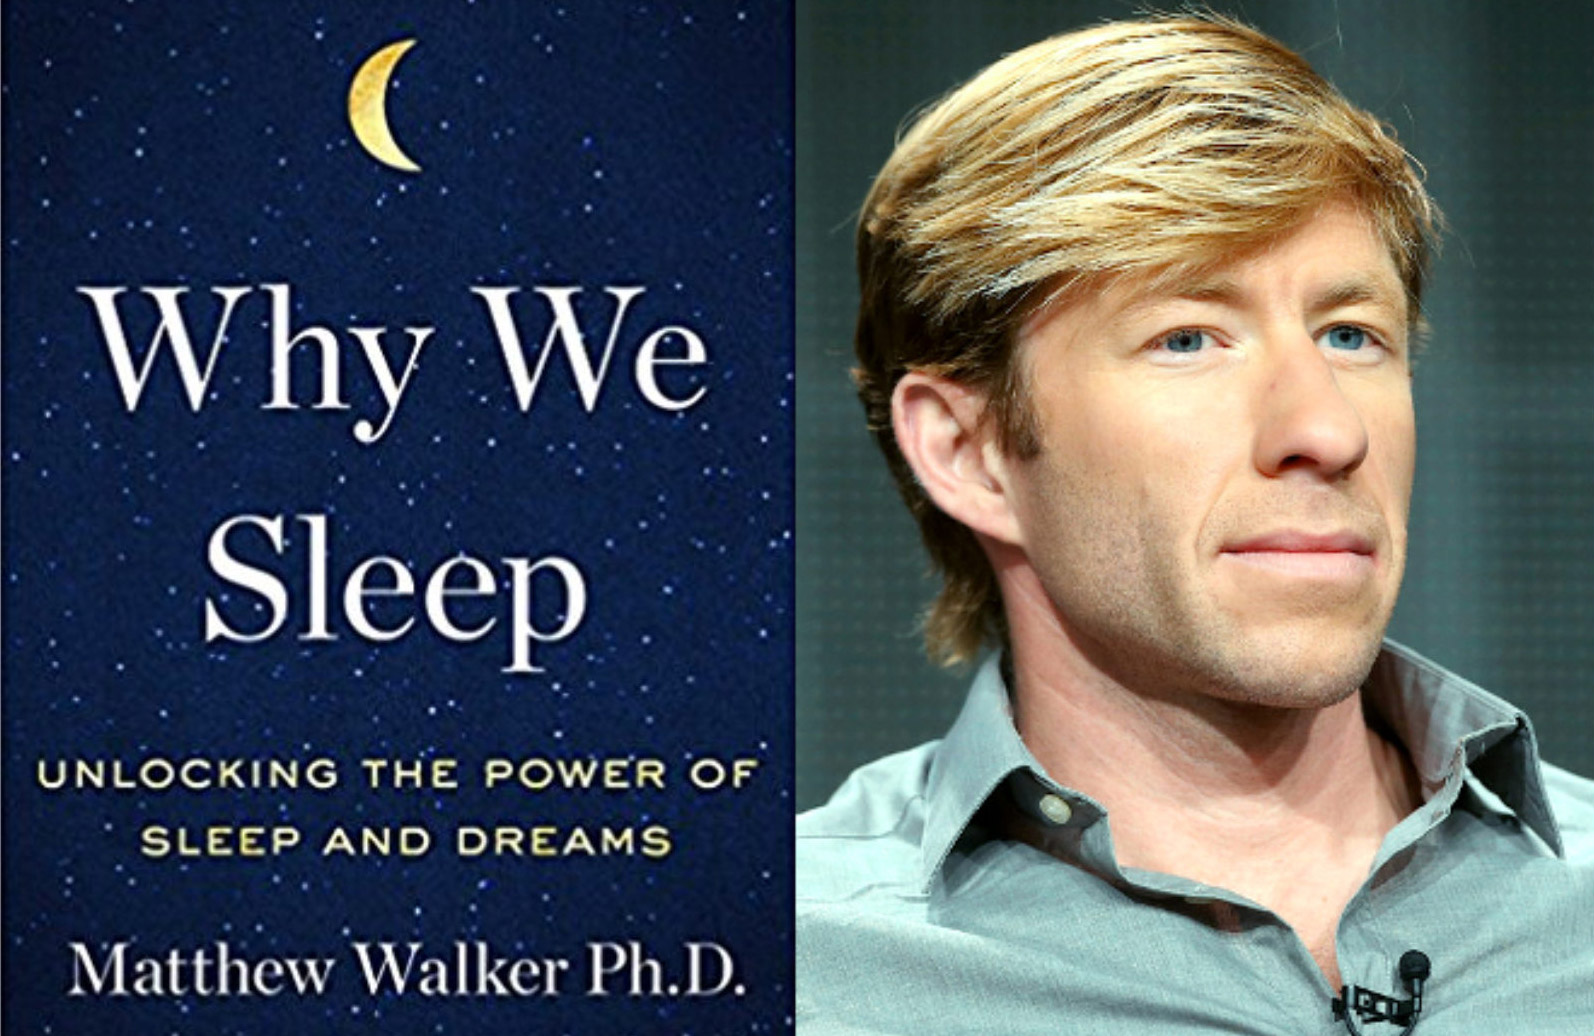 Book cover
Why we sleep by Matthew Walker, PhD